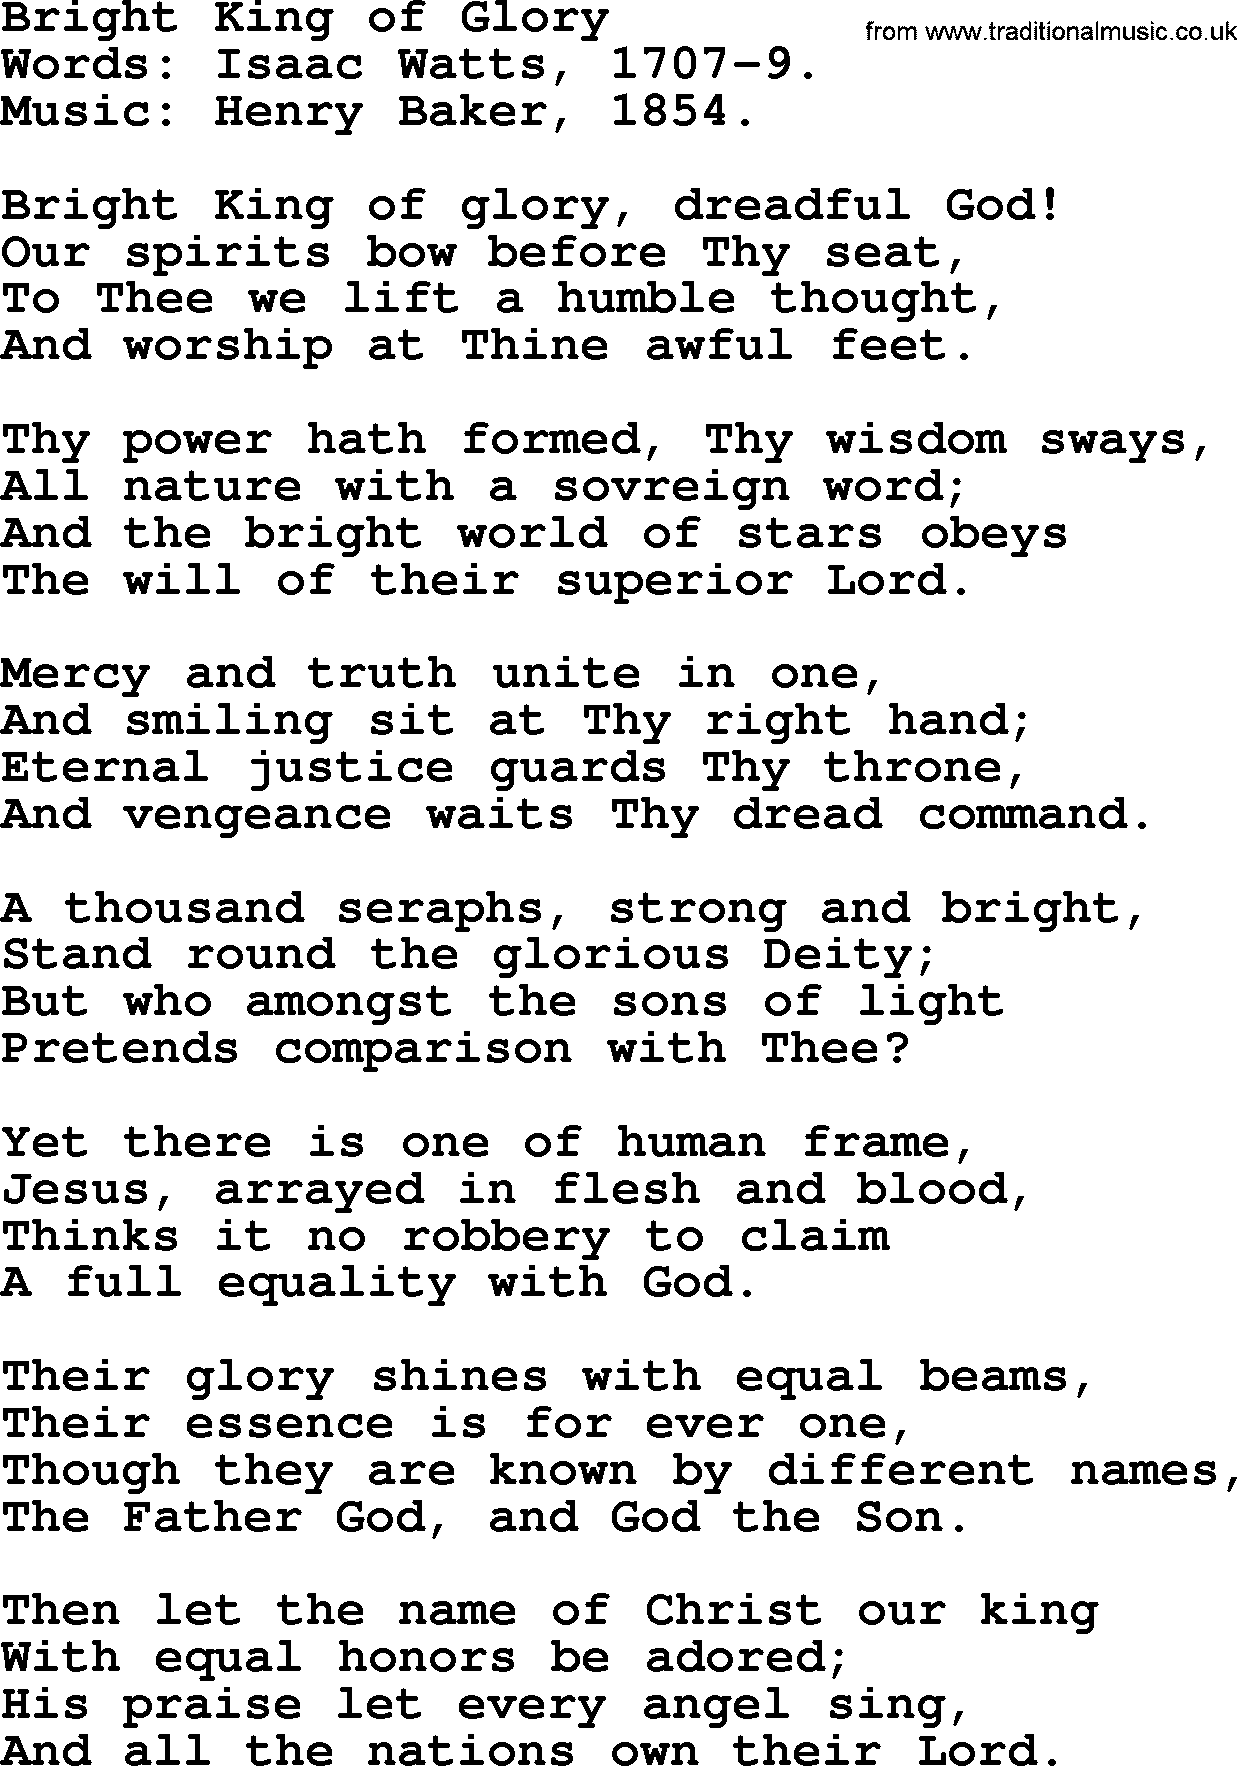 Isaac Watts Christian hymn: Bright King of Glory- lyricss